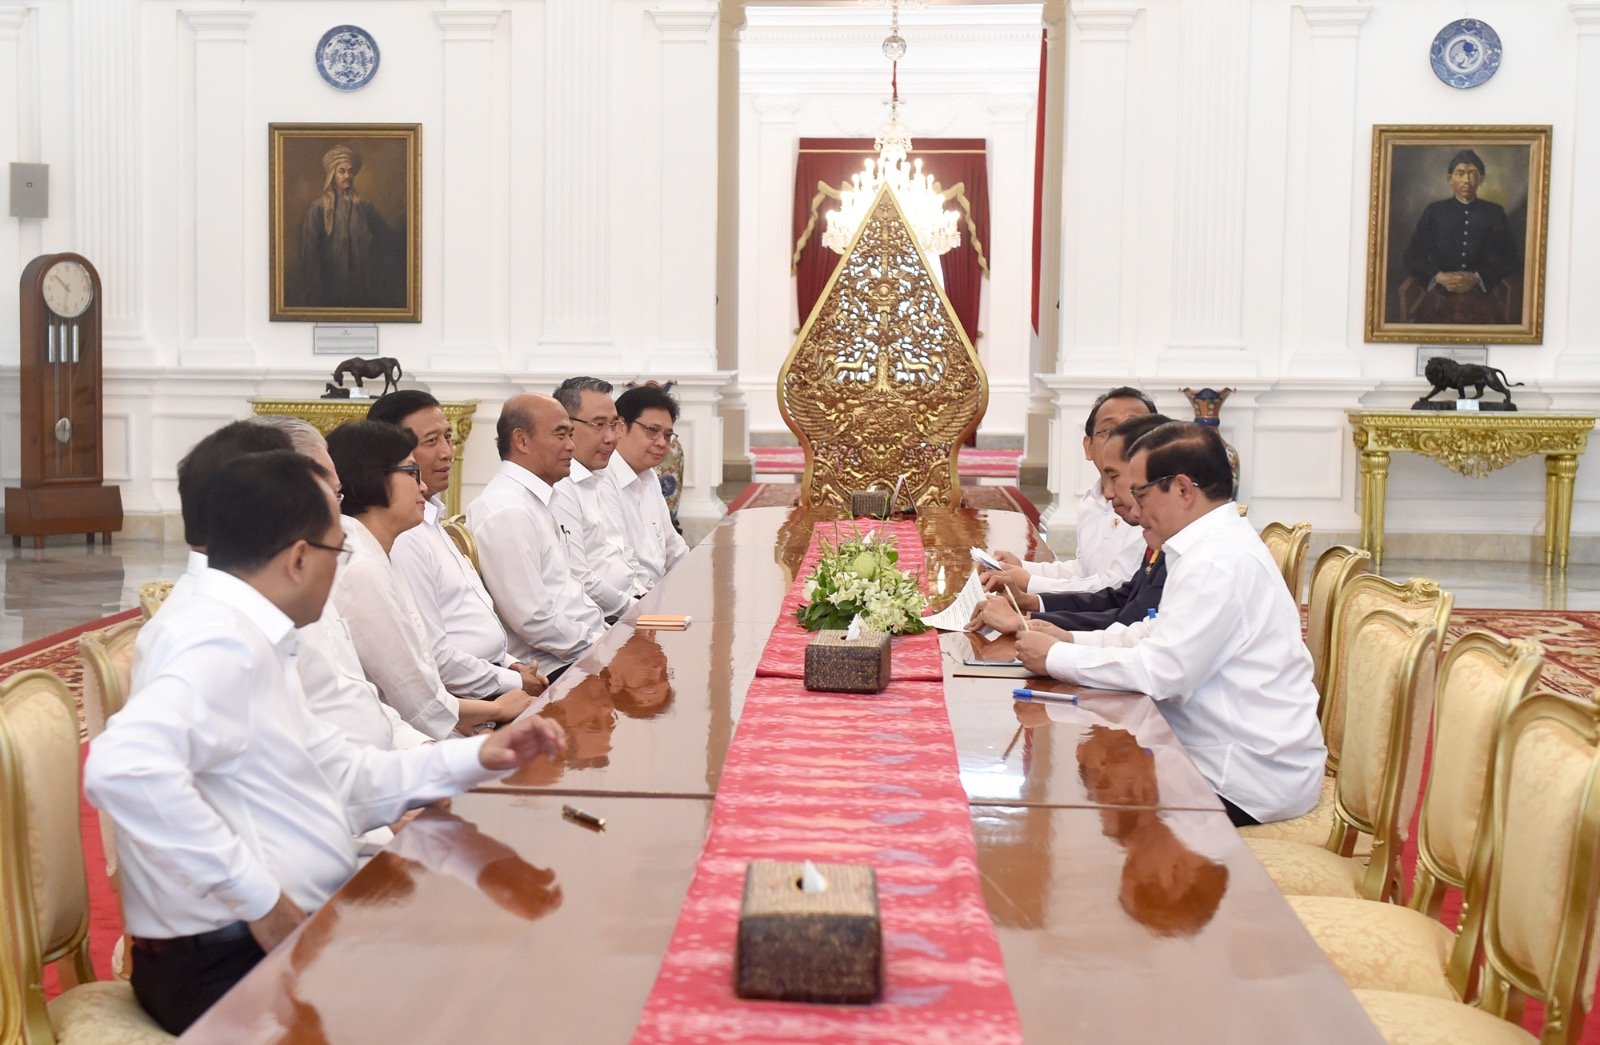 Menteri-menteri hasil perombakan (resuffle) berbincang dengan Presiden Joko Widodo di Istana Negara.